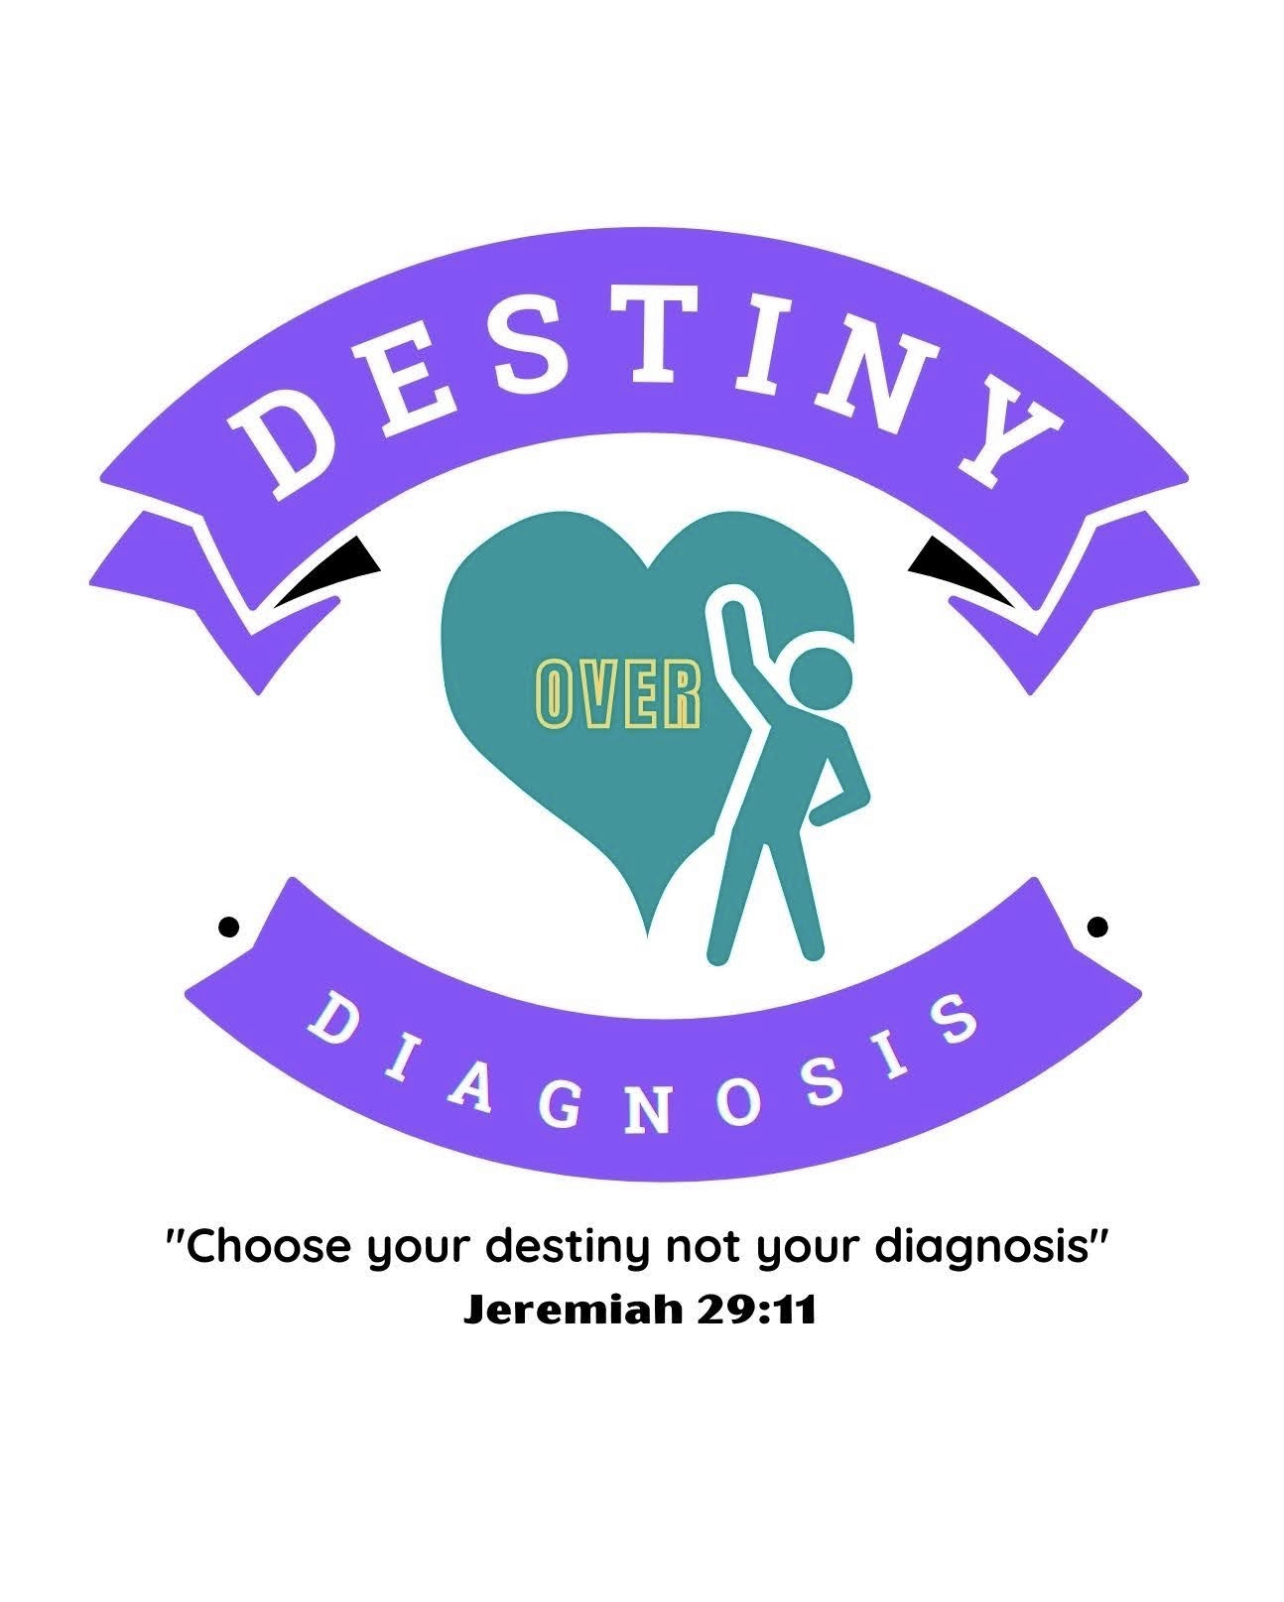 Second Annual Destiny Over Diagnosis Awards Celebrates Triumph Over Adversity